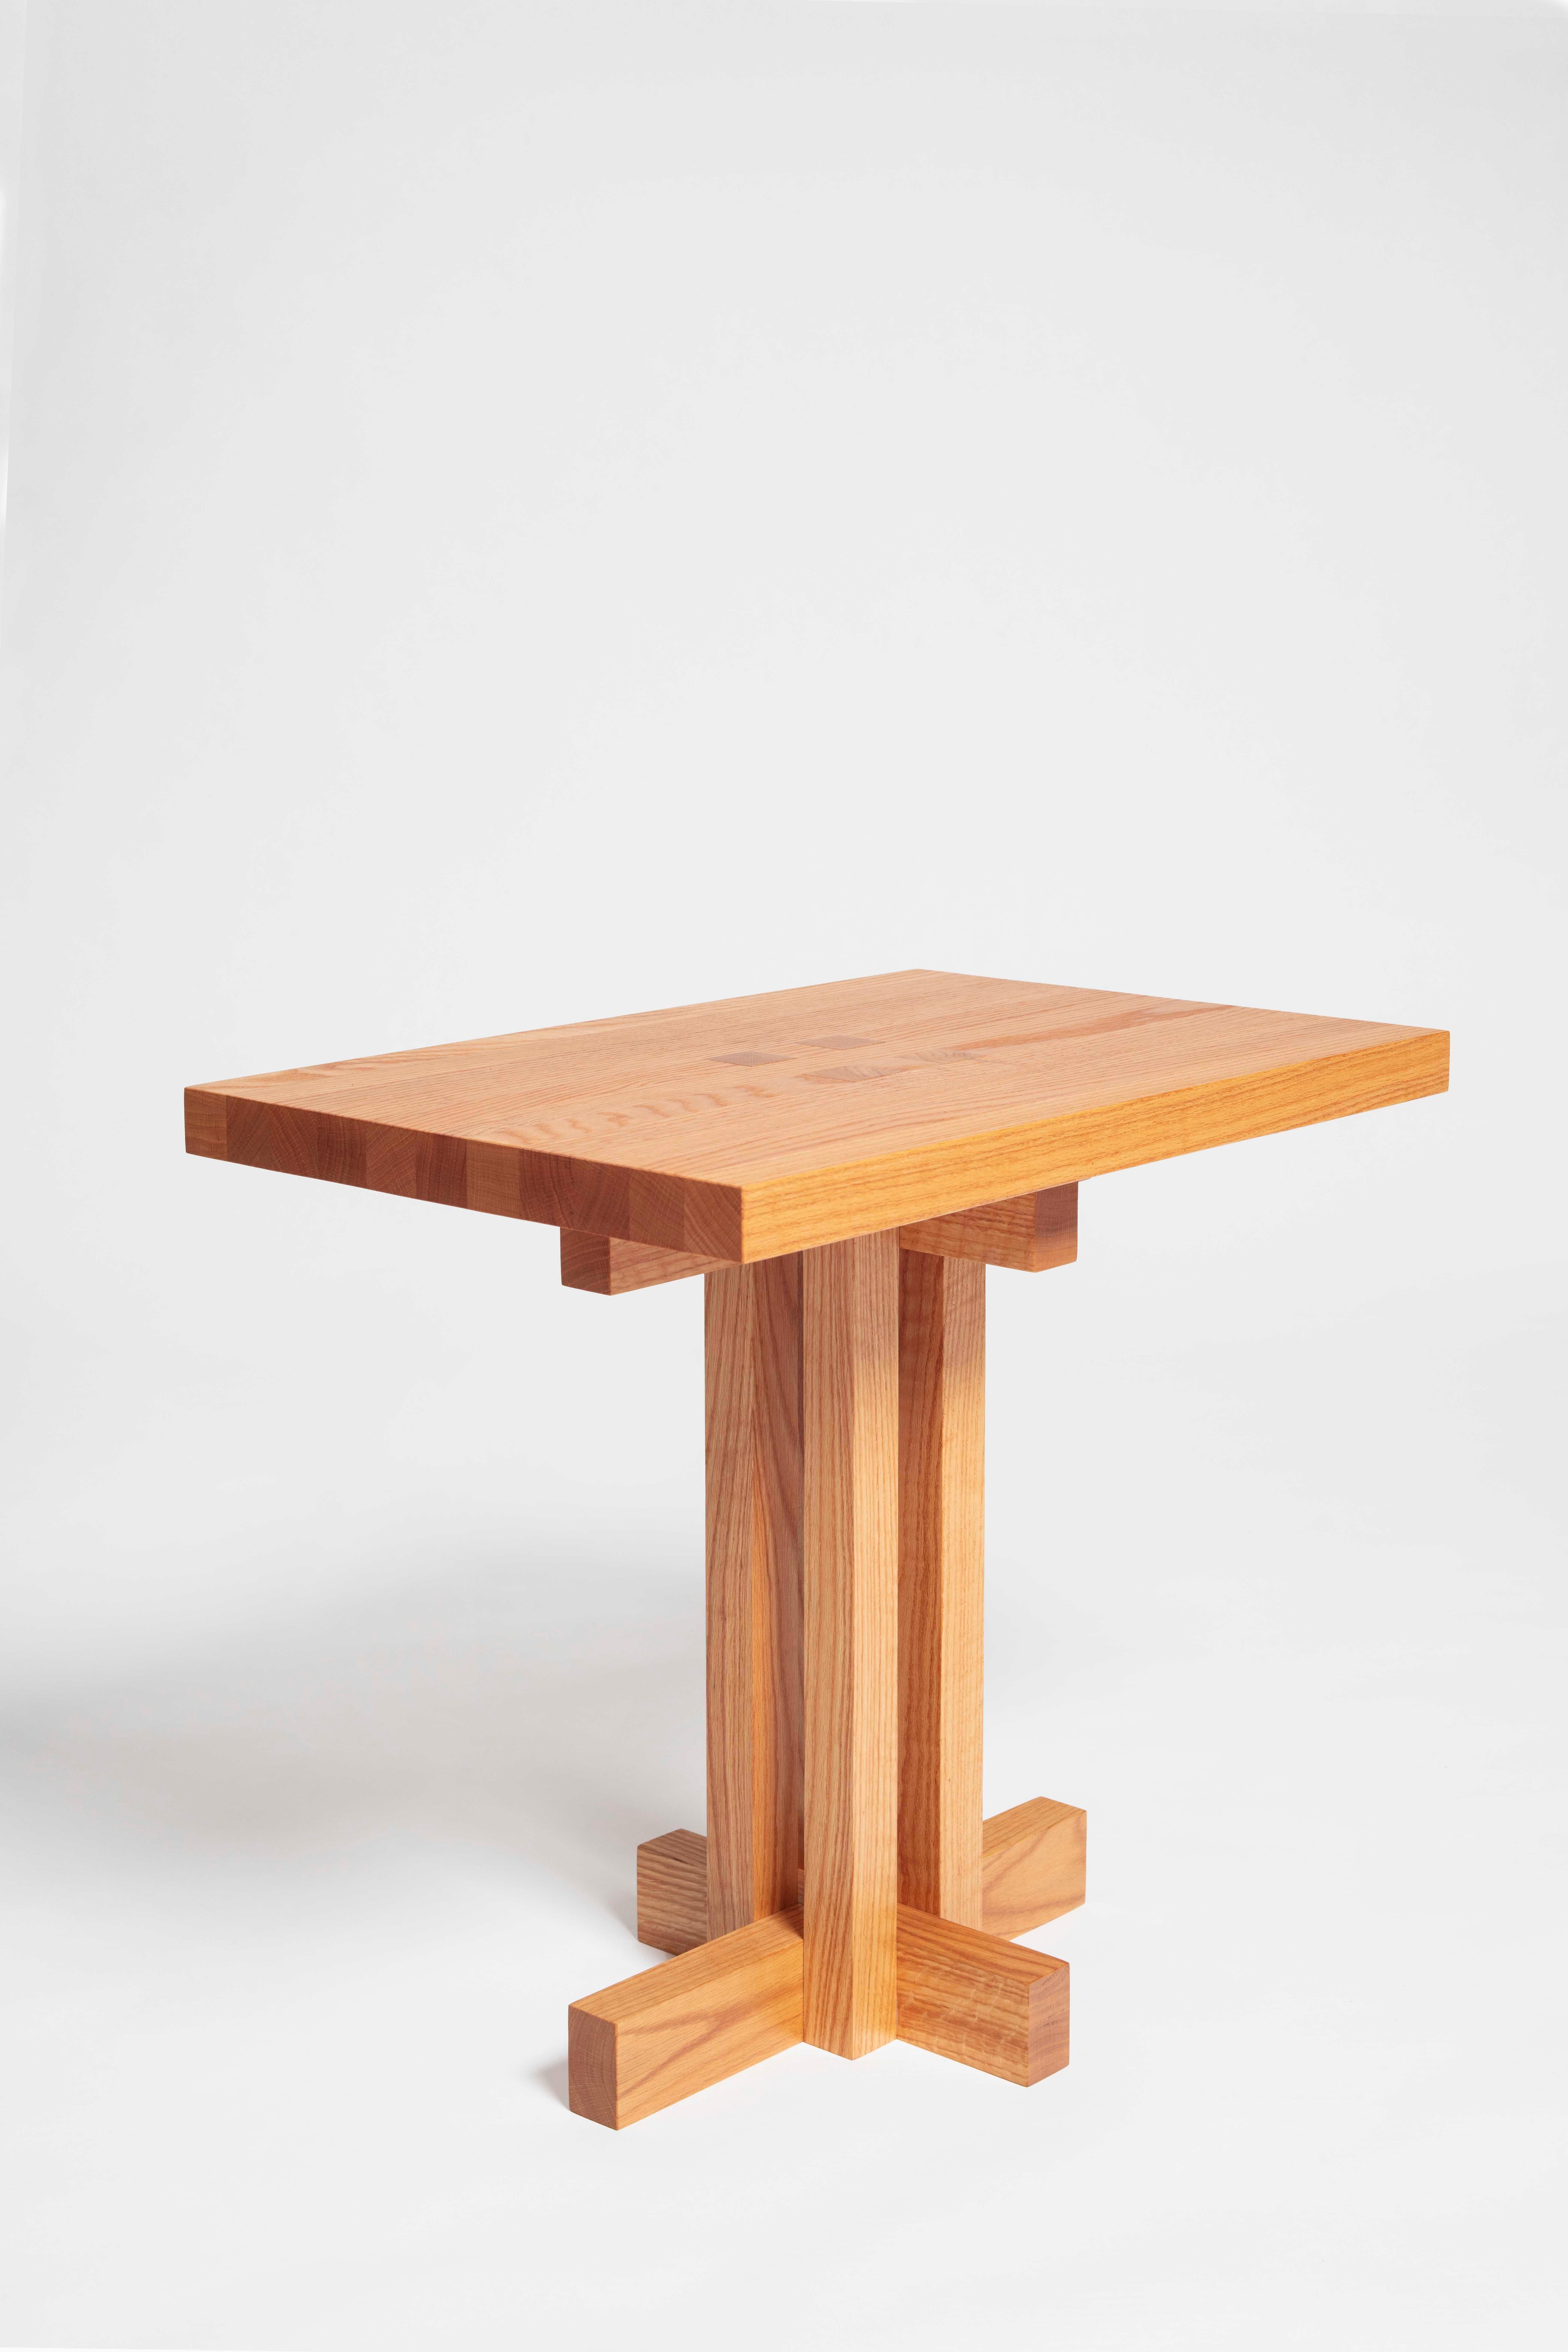 Woodwork Ray Kappe RK12 Side Table in Red Oak by Original in Berlin, Germany, 2020 For Sale